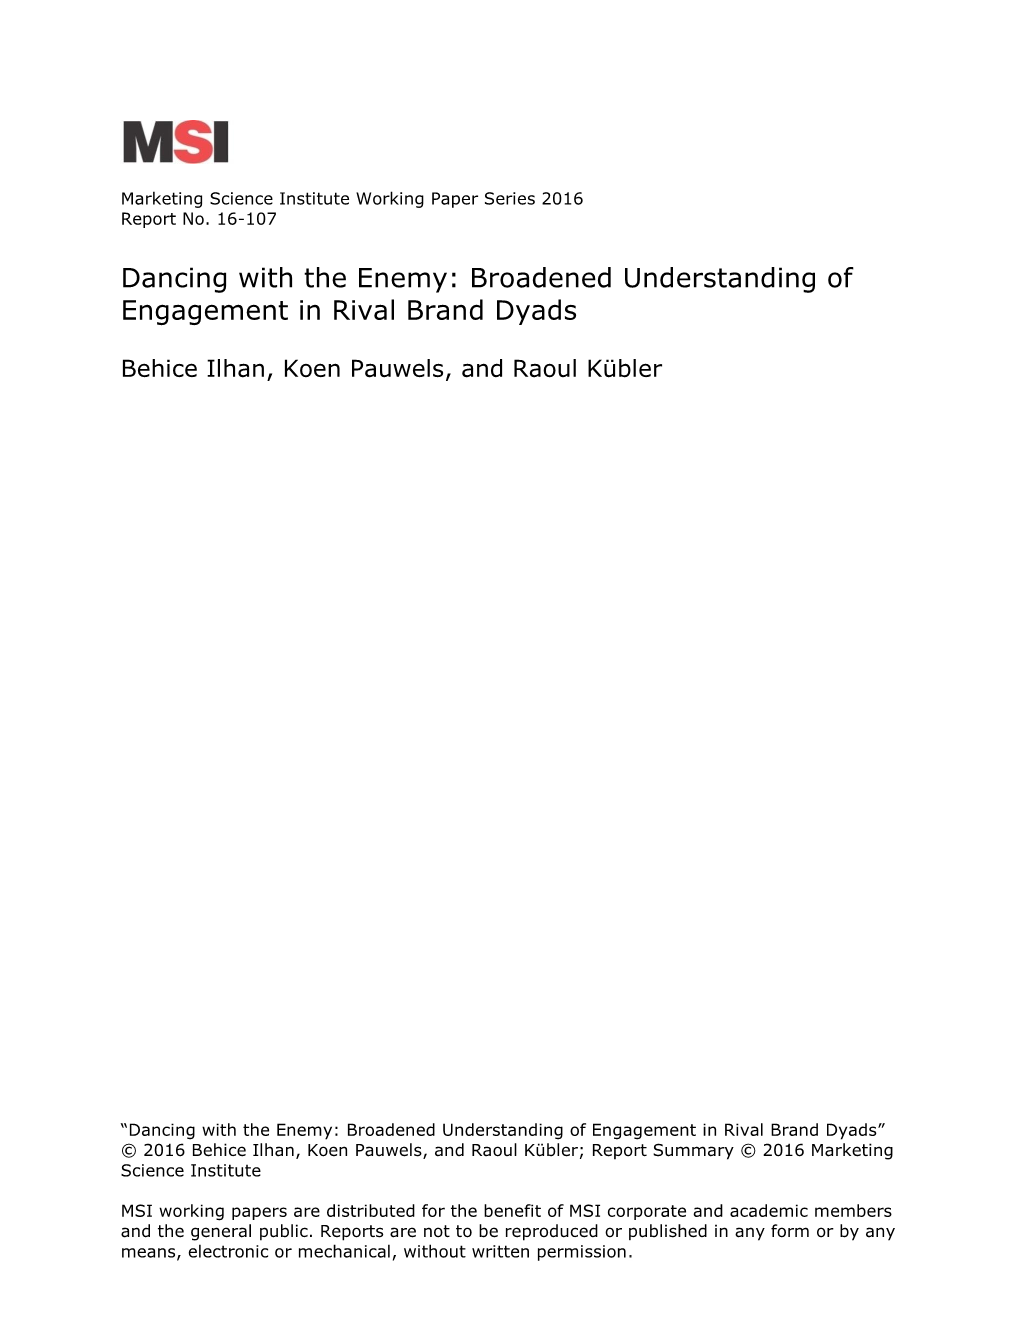 Broadened Understanding of Engagement in Rival Brand Dyads